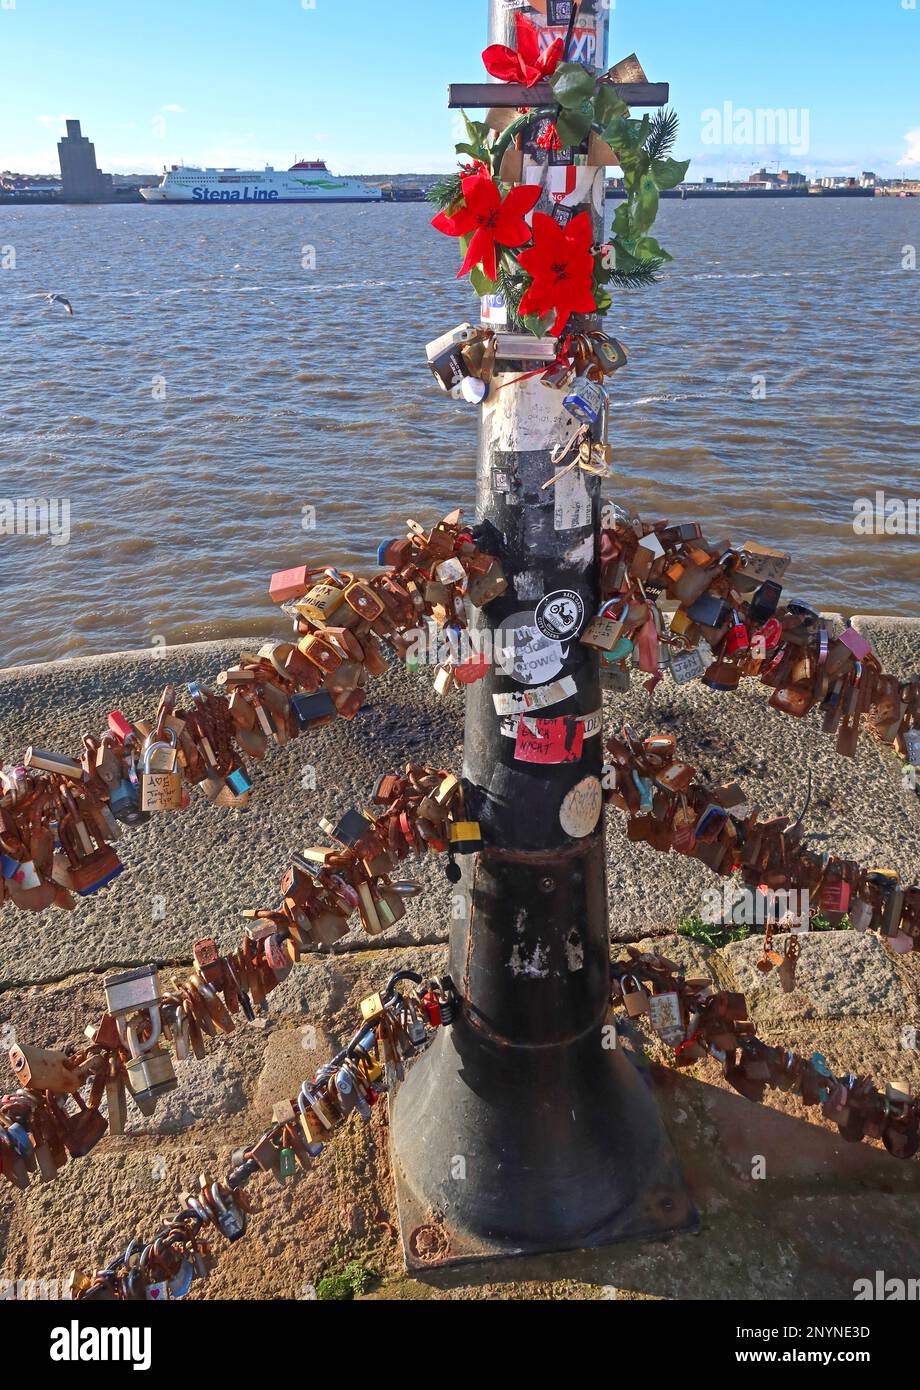 Love padlocks on the chains at the river Mersey promenade, Pier Head, Royal Albert Dock, Liverpool, Merseyside, England, UK,  L3 4AF Stock Photo